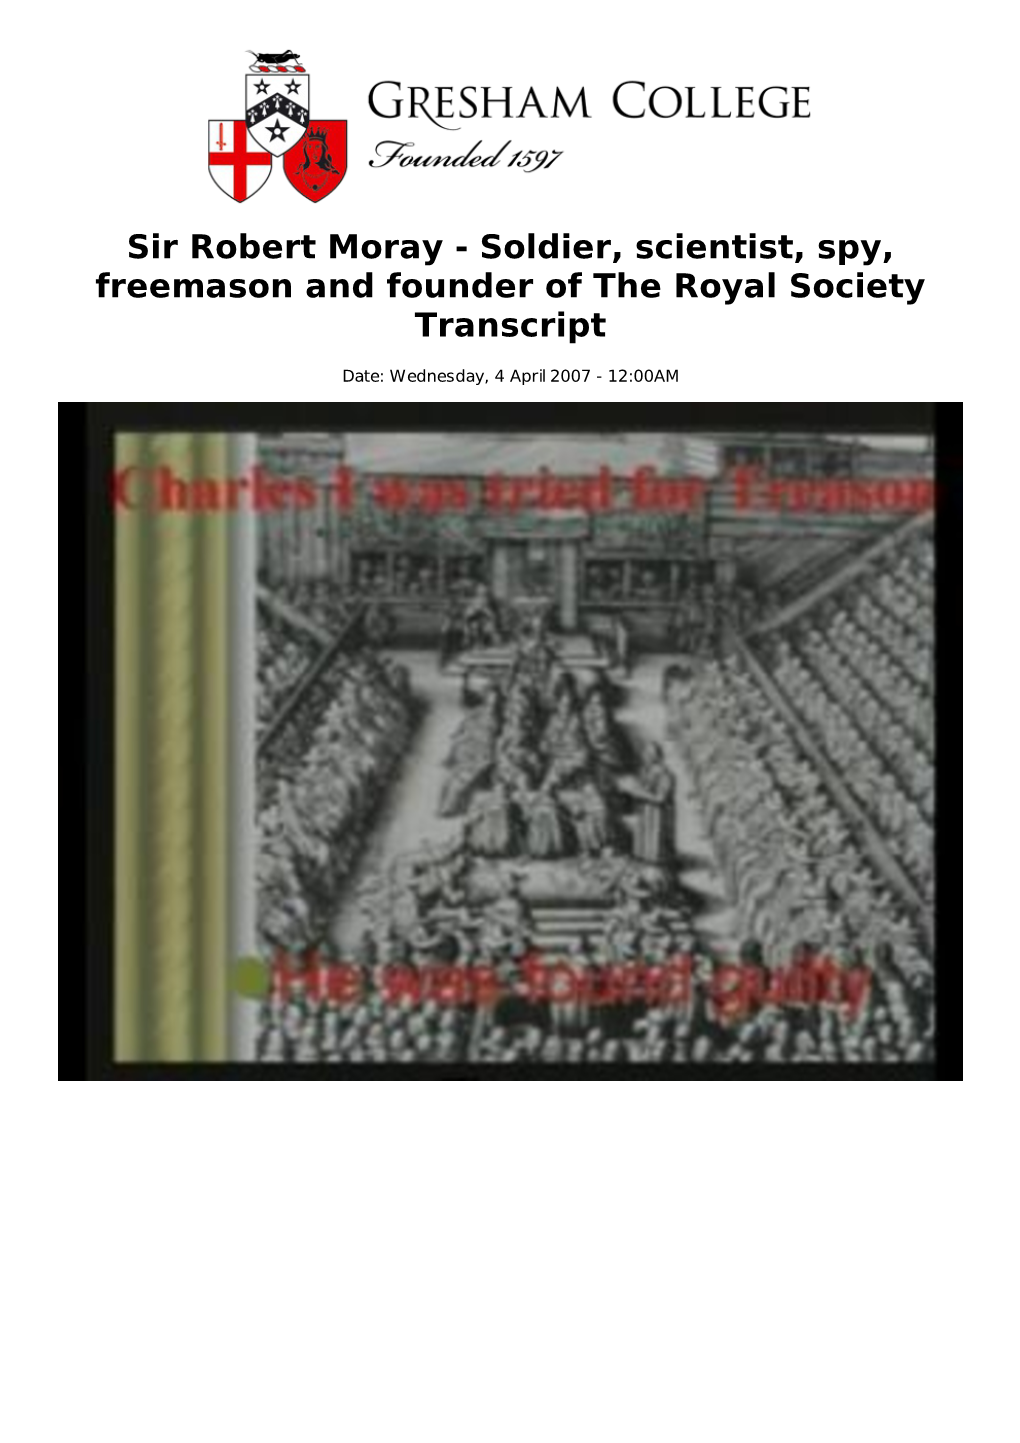 Sir Robert Moray - Soldier, Scientist, Spy, Freemason and Founder of the Royal Society Transcript